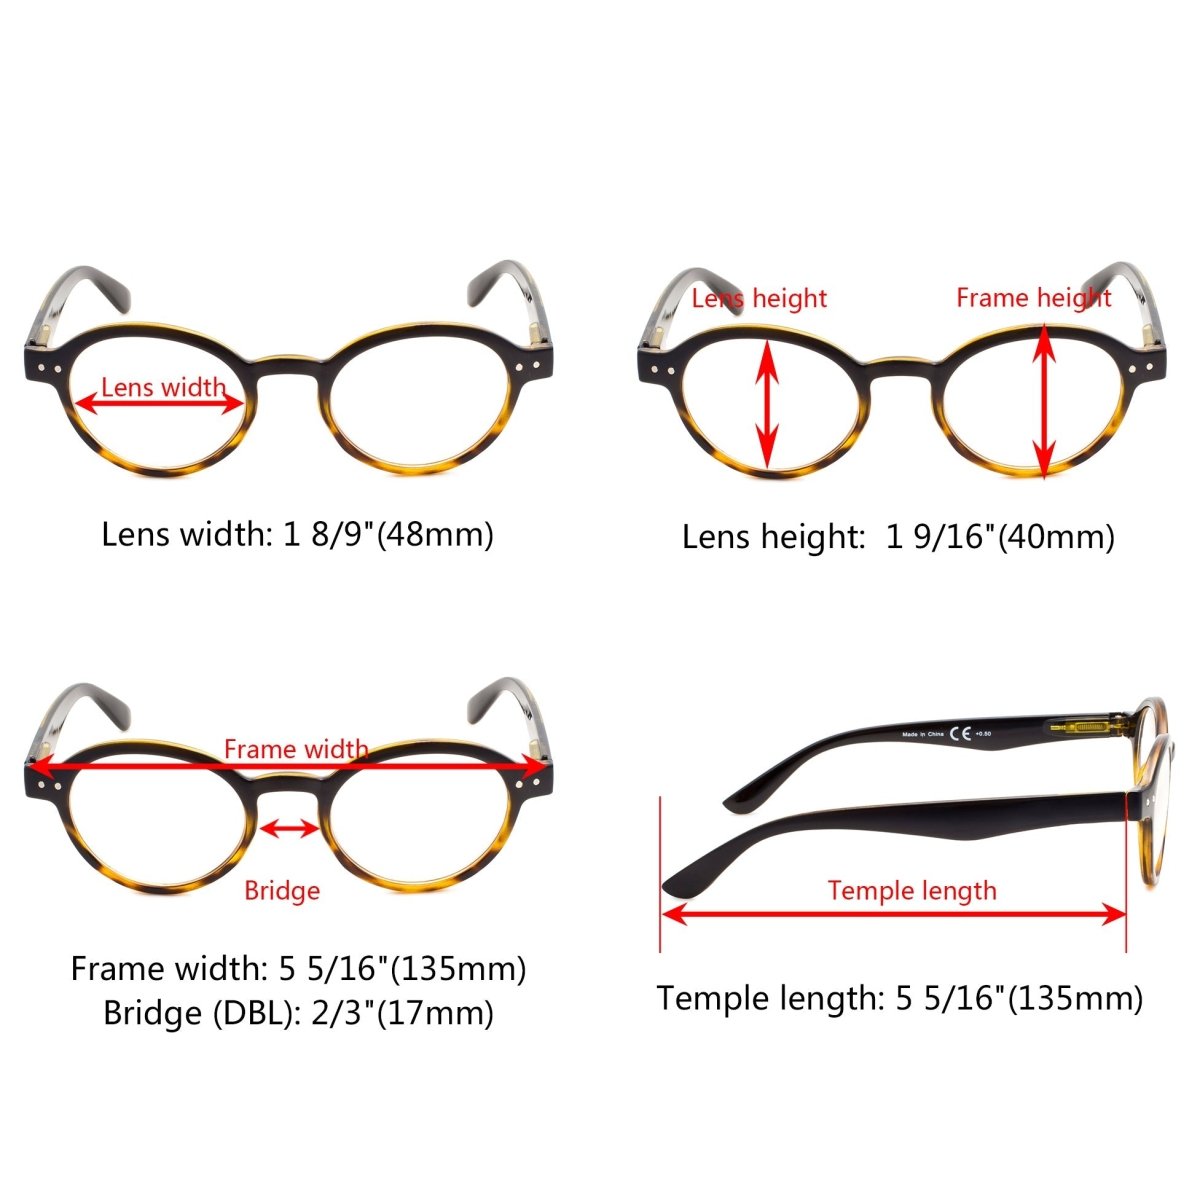 10 Pack Retro Round Reading Glasses Include Sunglasses R070eyekeeper.com